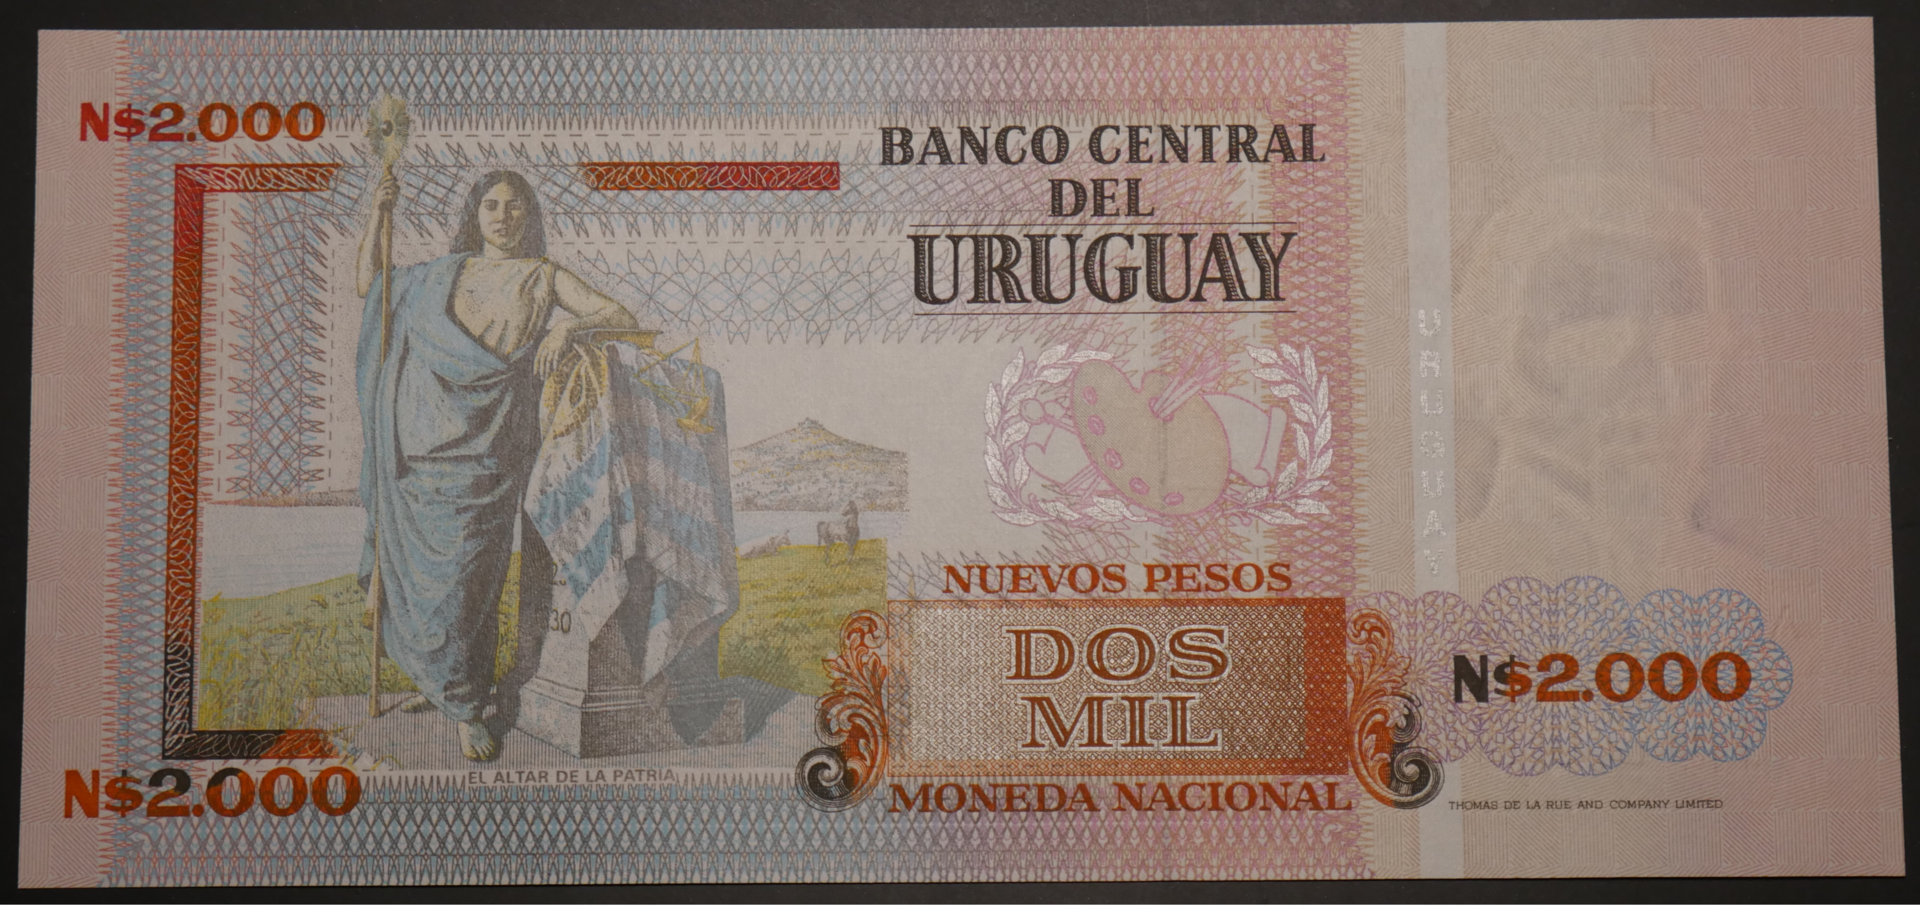 Uruguay_2000Pesos_1989_02.png